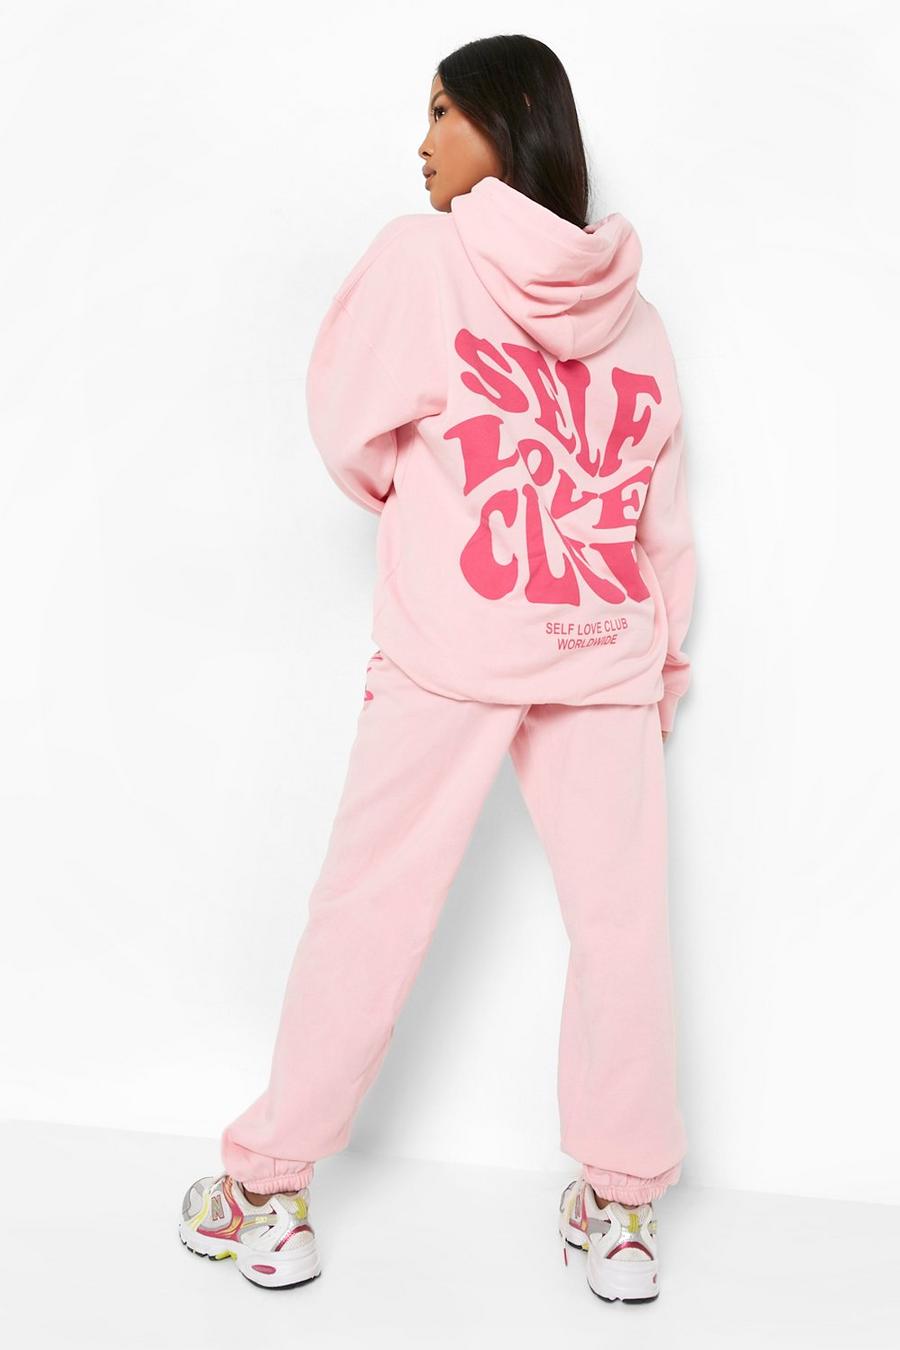 Petite Trainingsanzug mit Self Love Club Print, Light pink rose